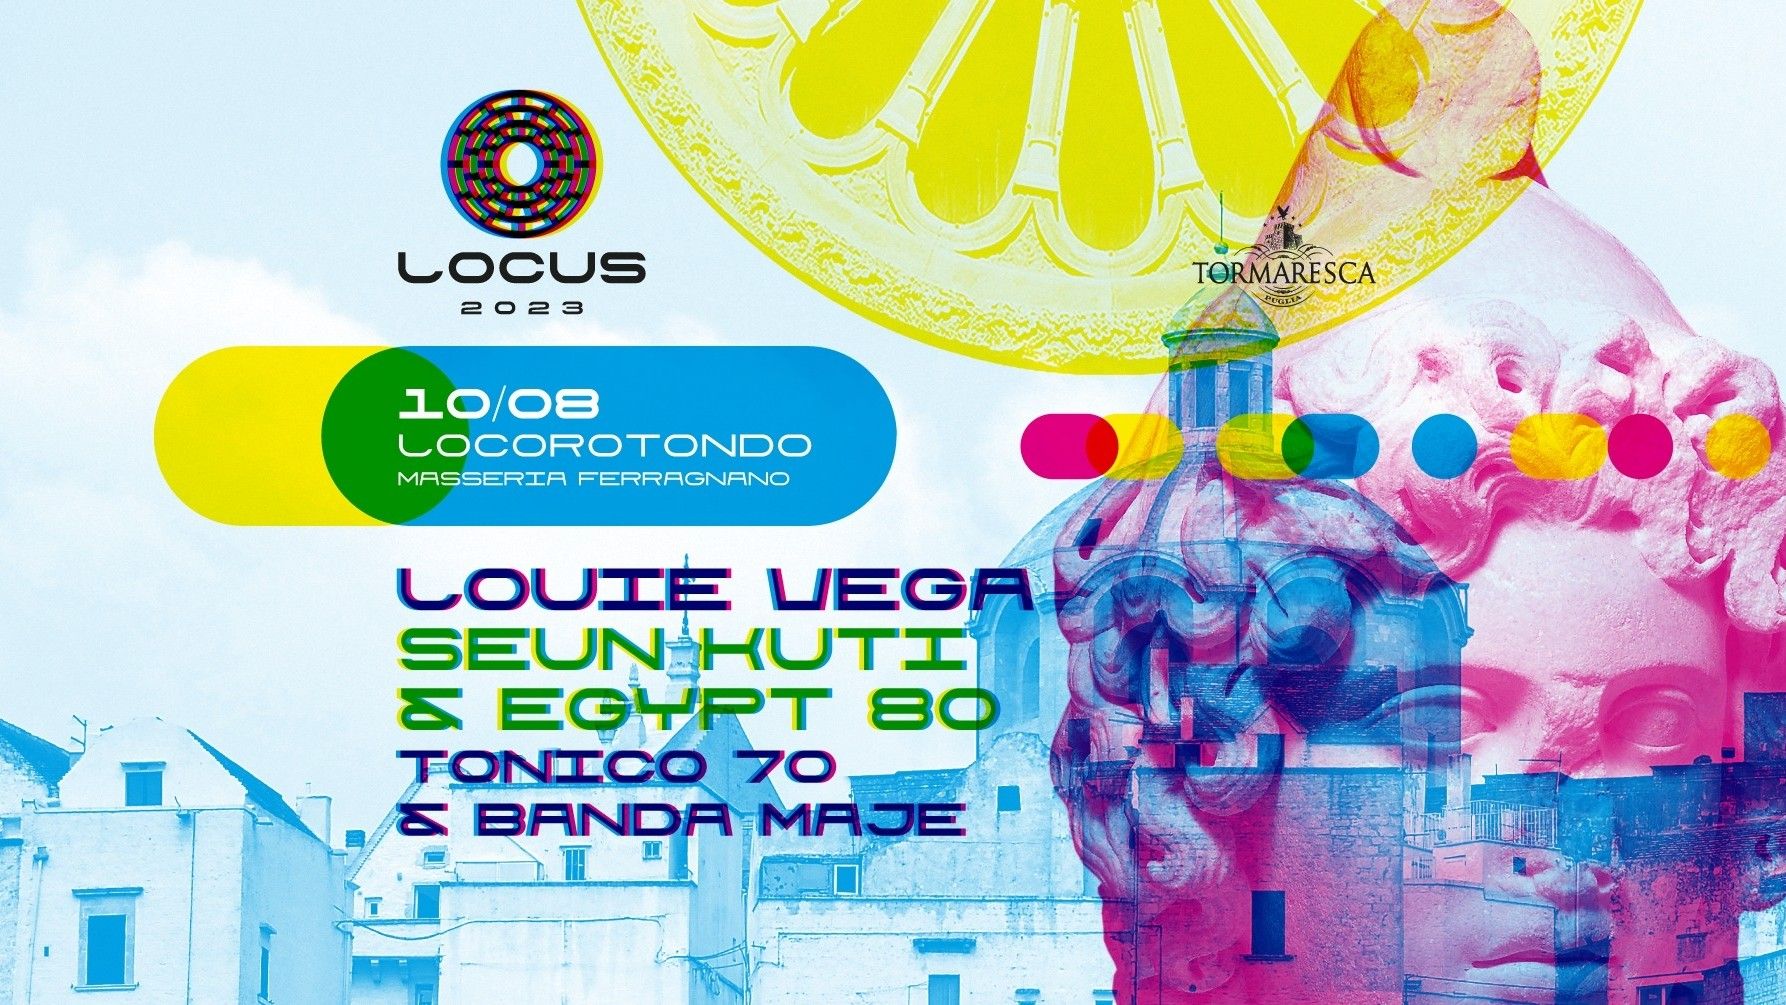 Locus festival: Louie Vega, Seun Kuti, Tonico 70